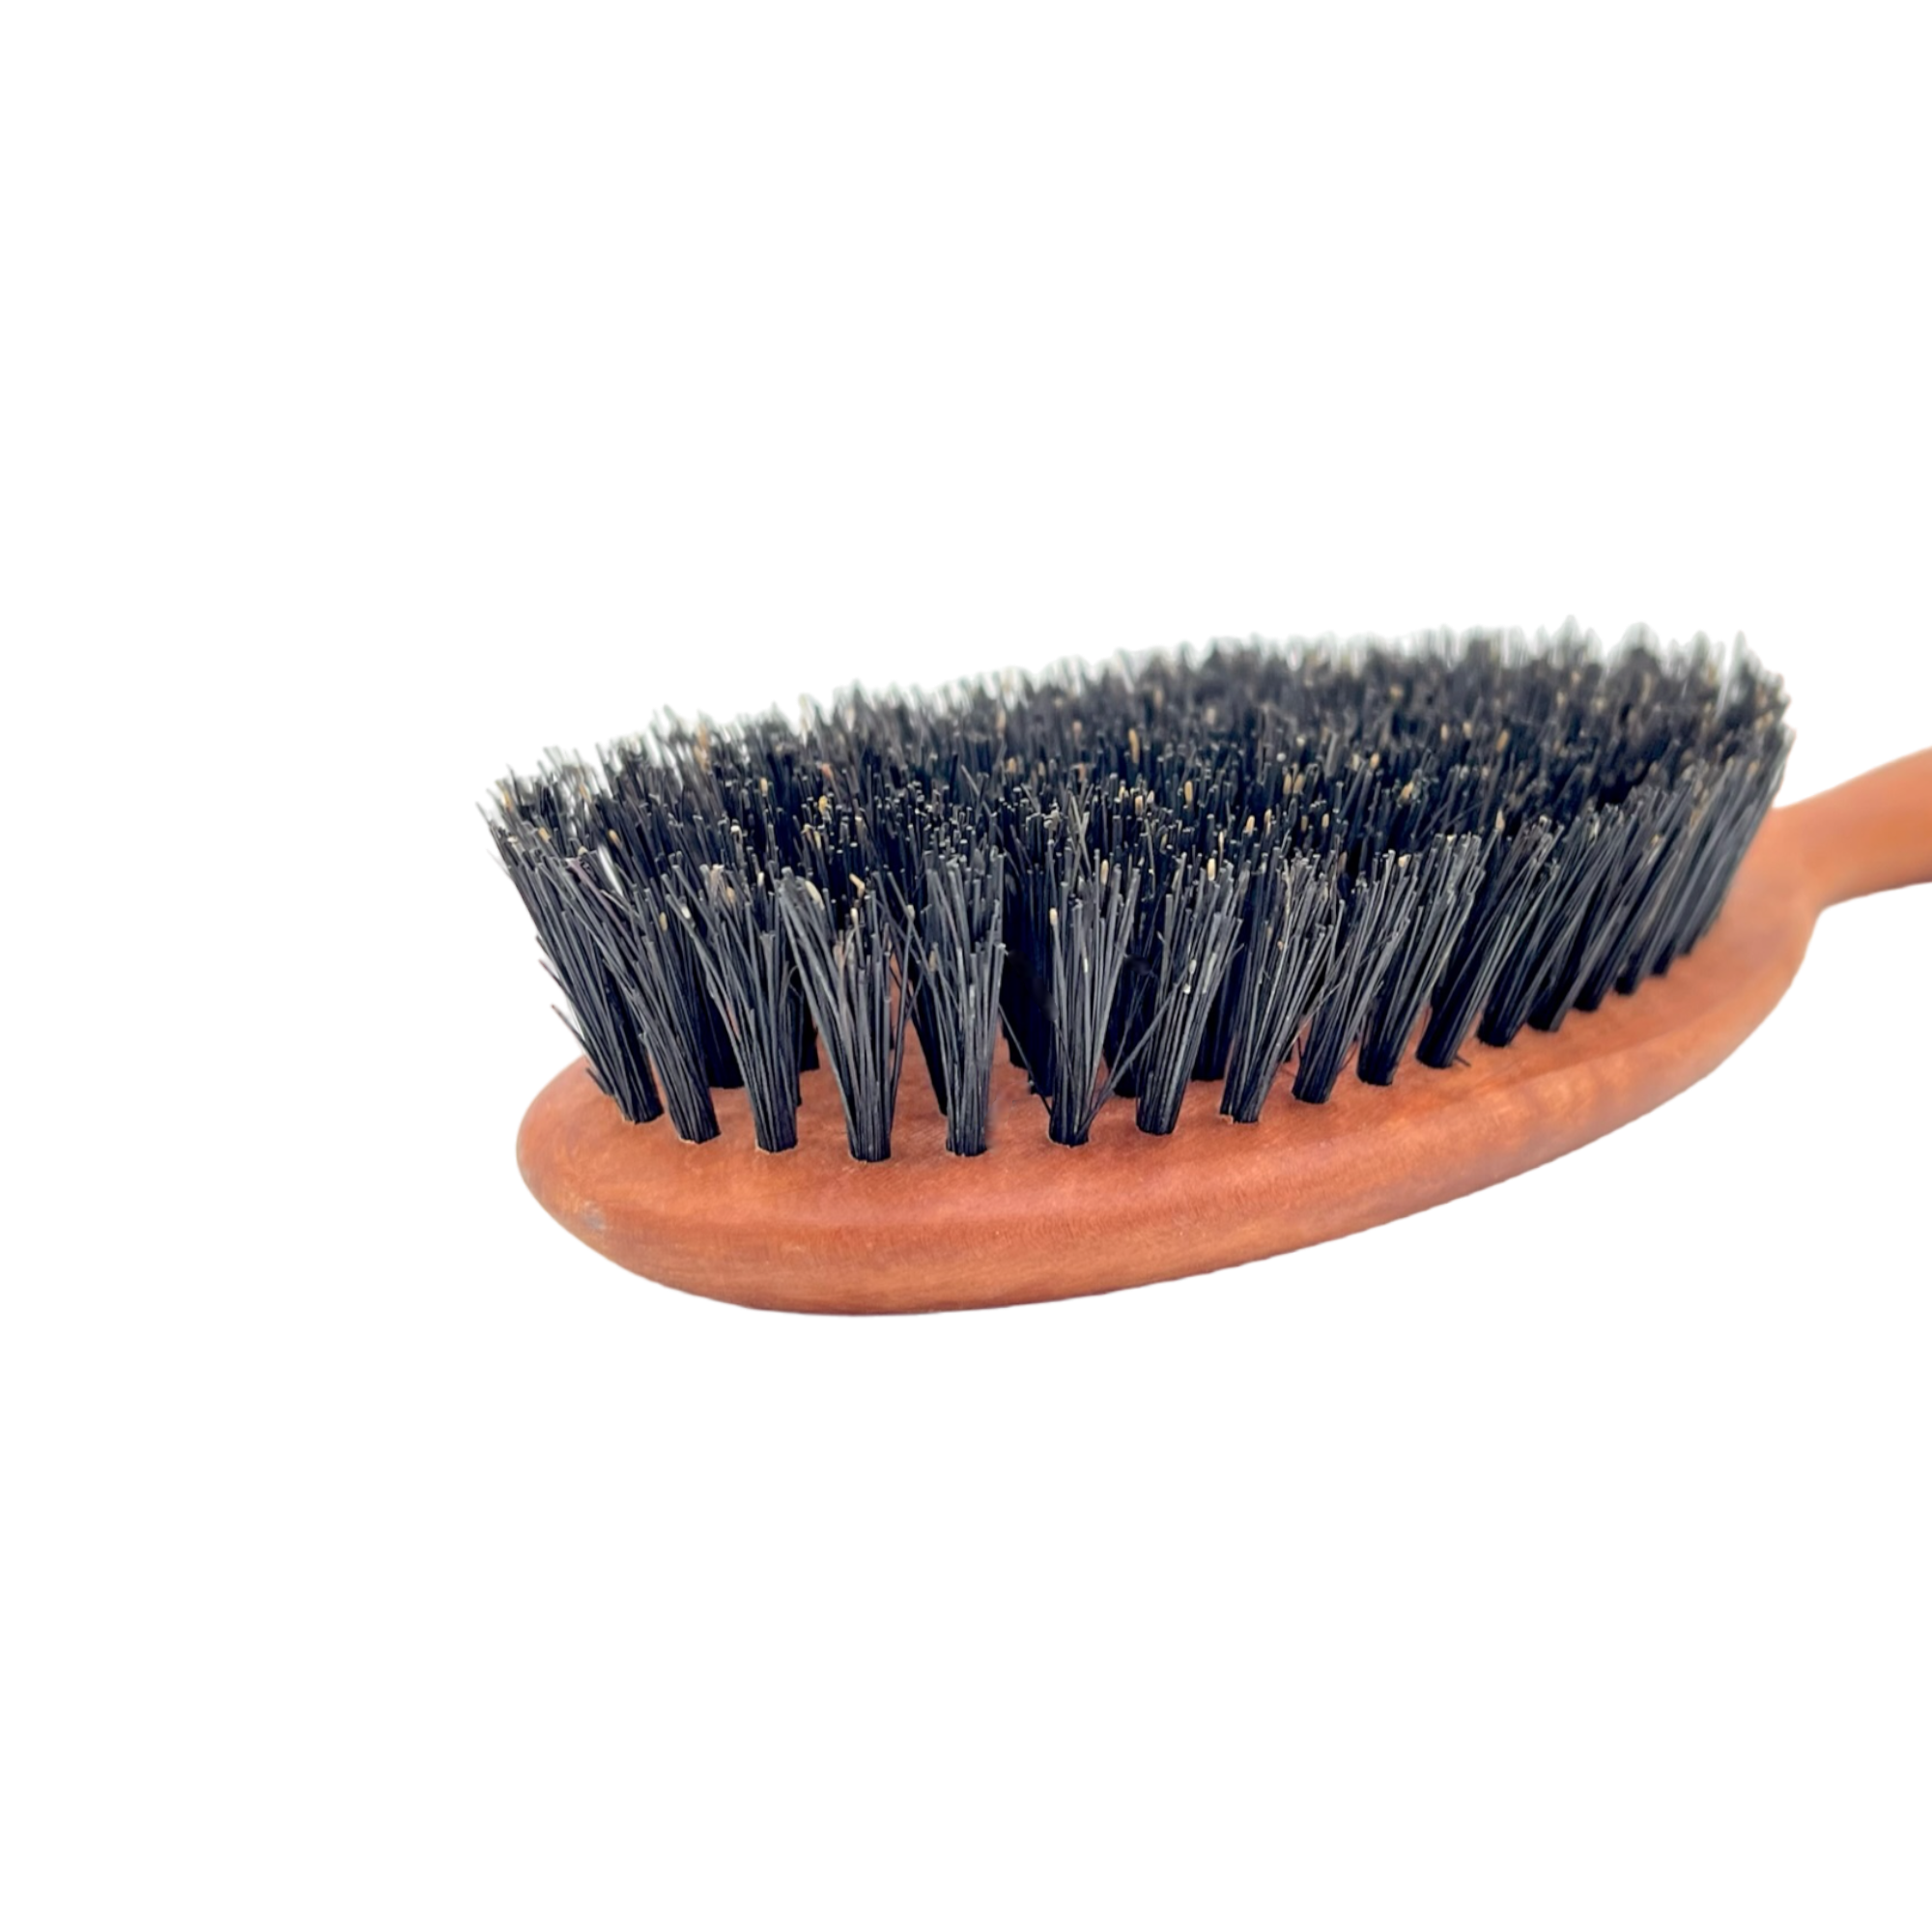 Dural Pear wood hair brush with boar bristles - 10 rows